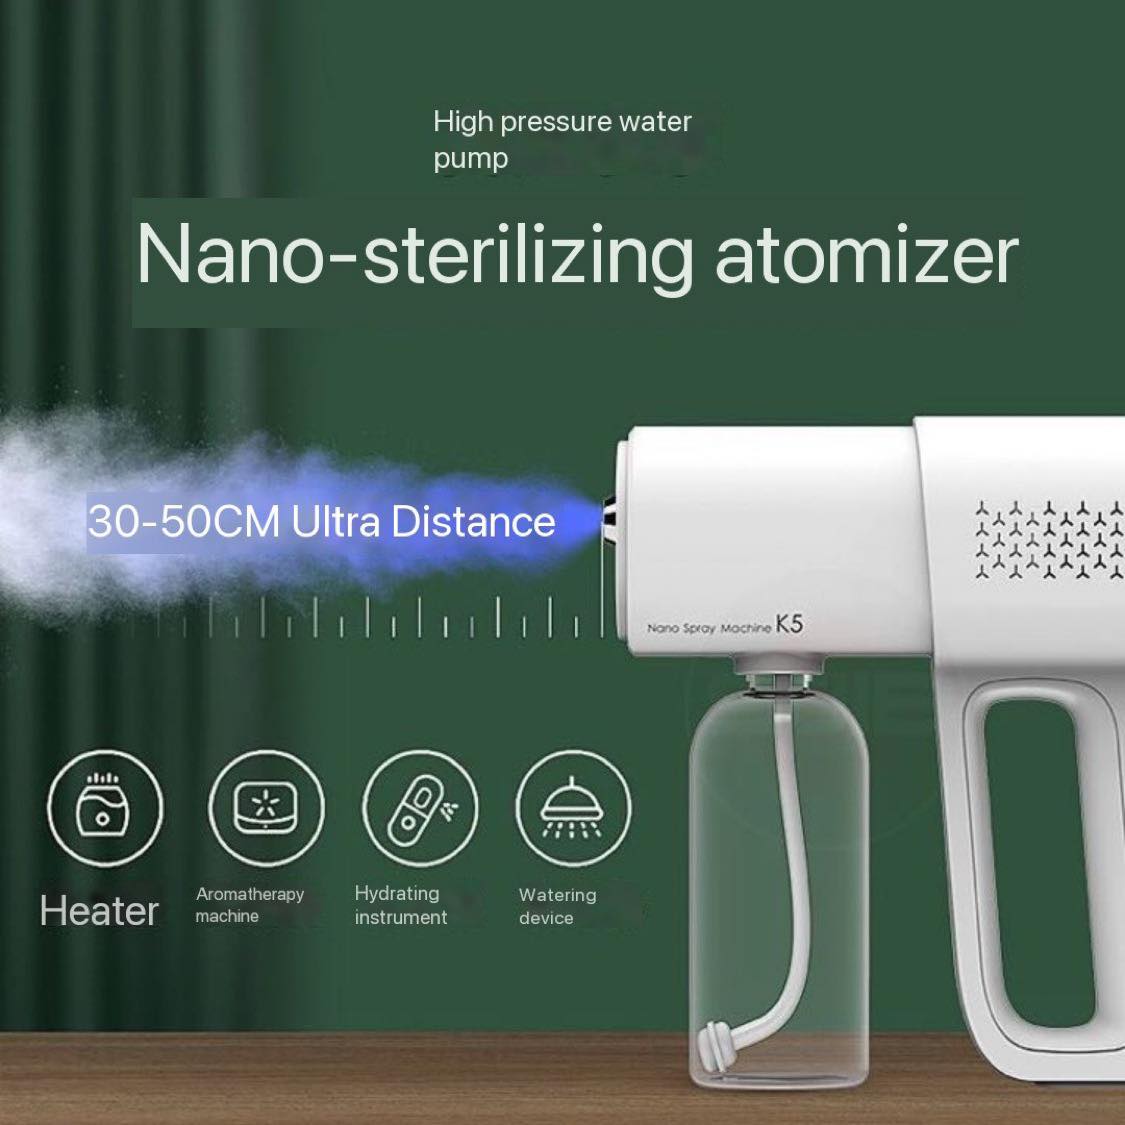 Generic Nano Atomizer Sterilizing Sprayer K5